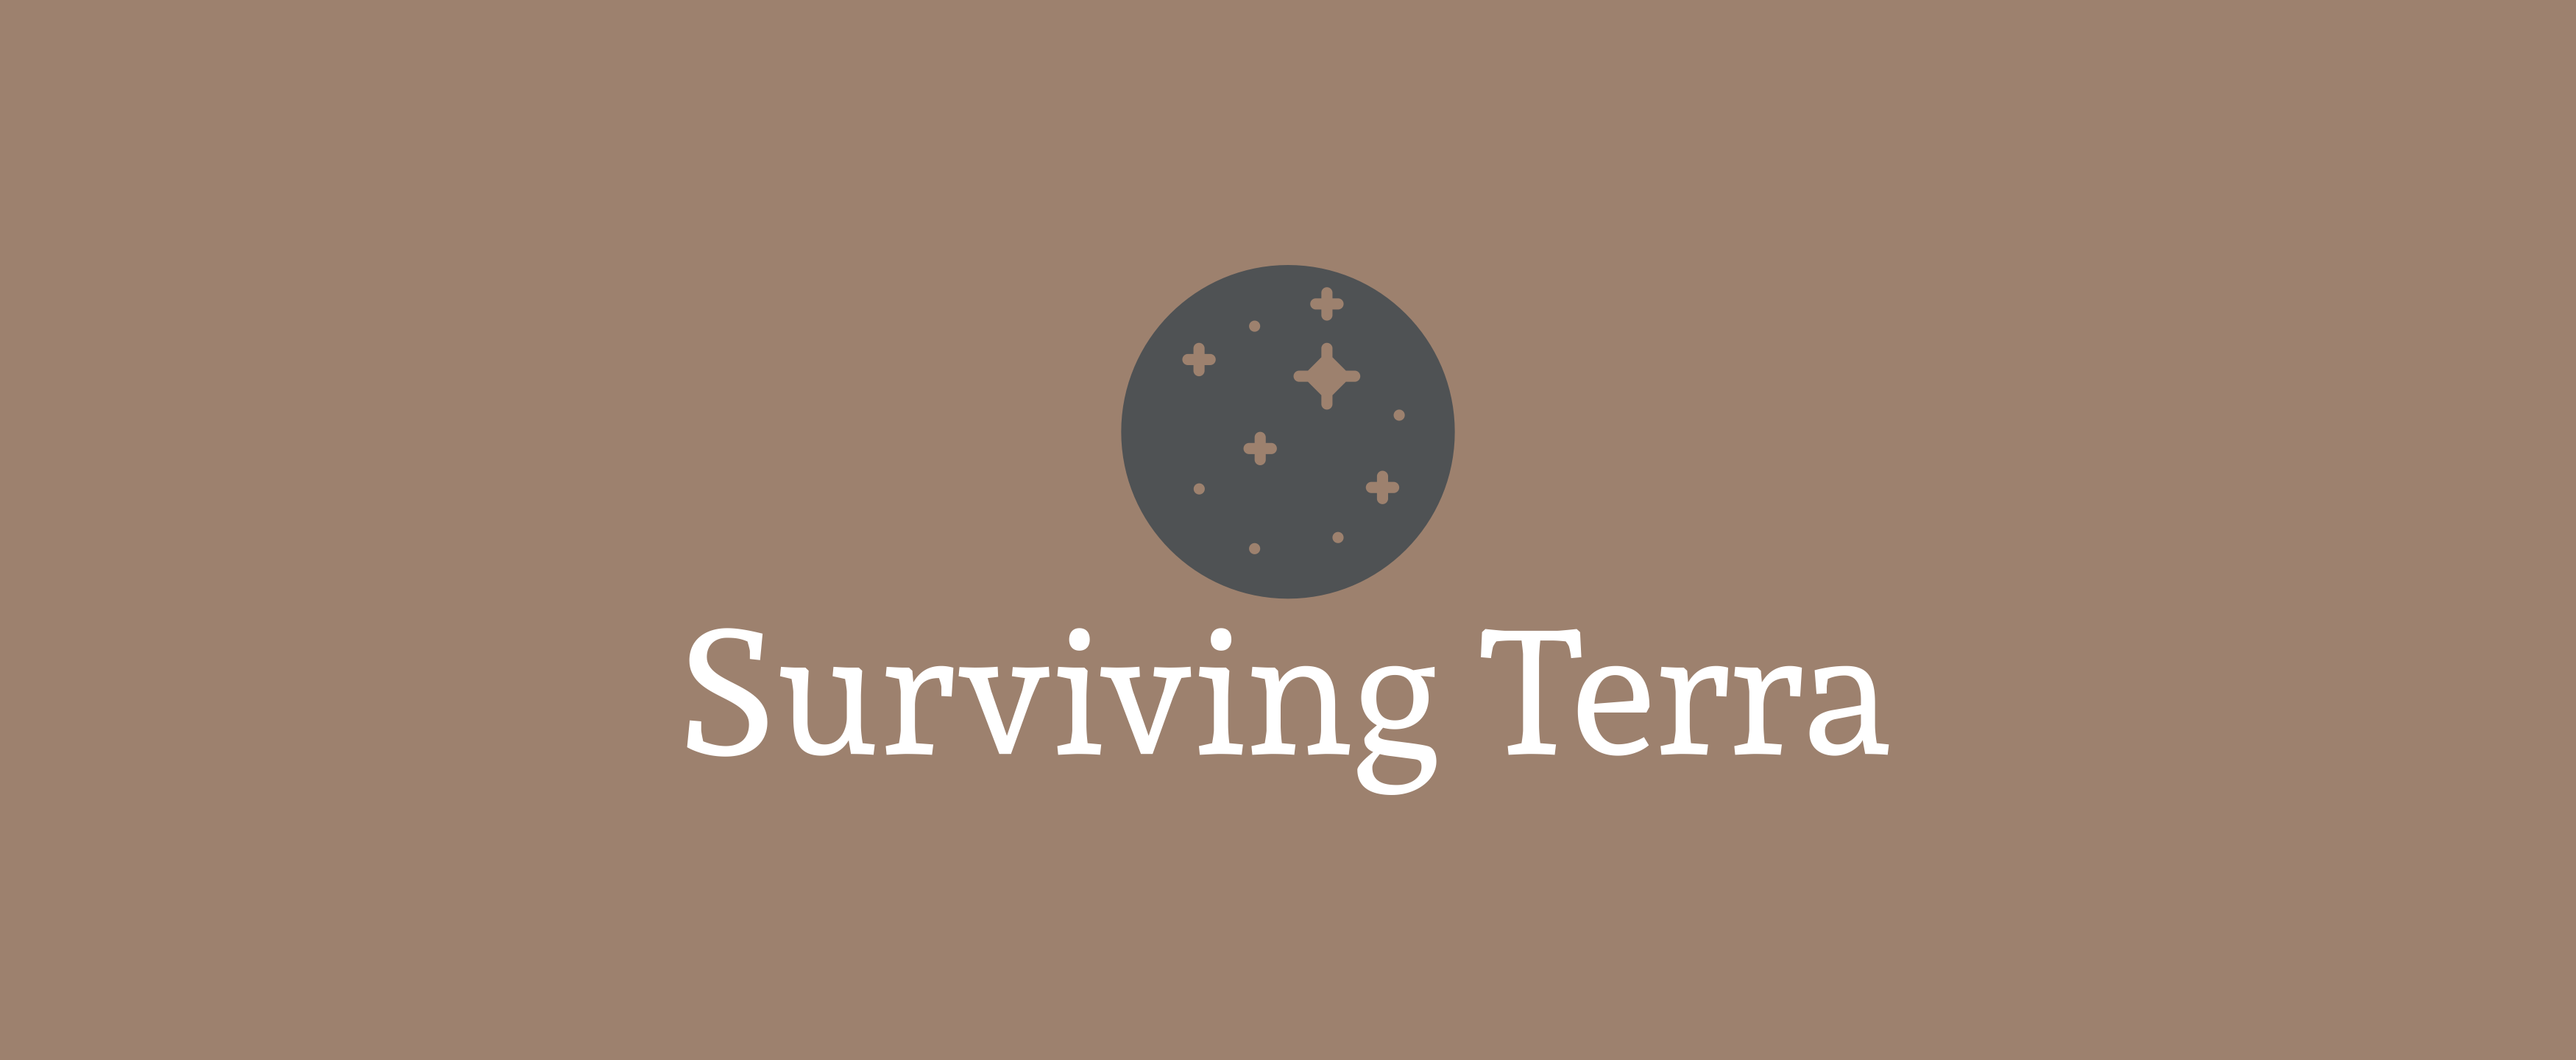 Surviving Terra